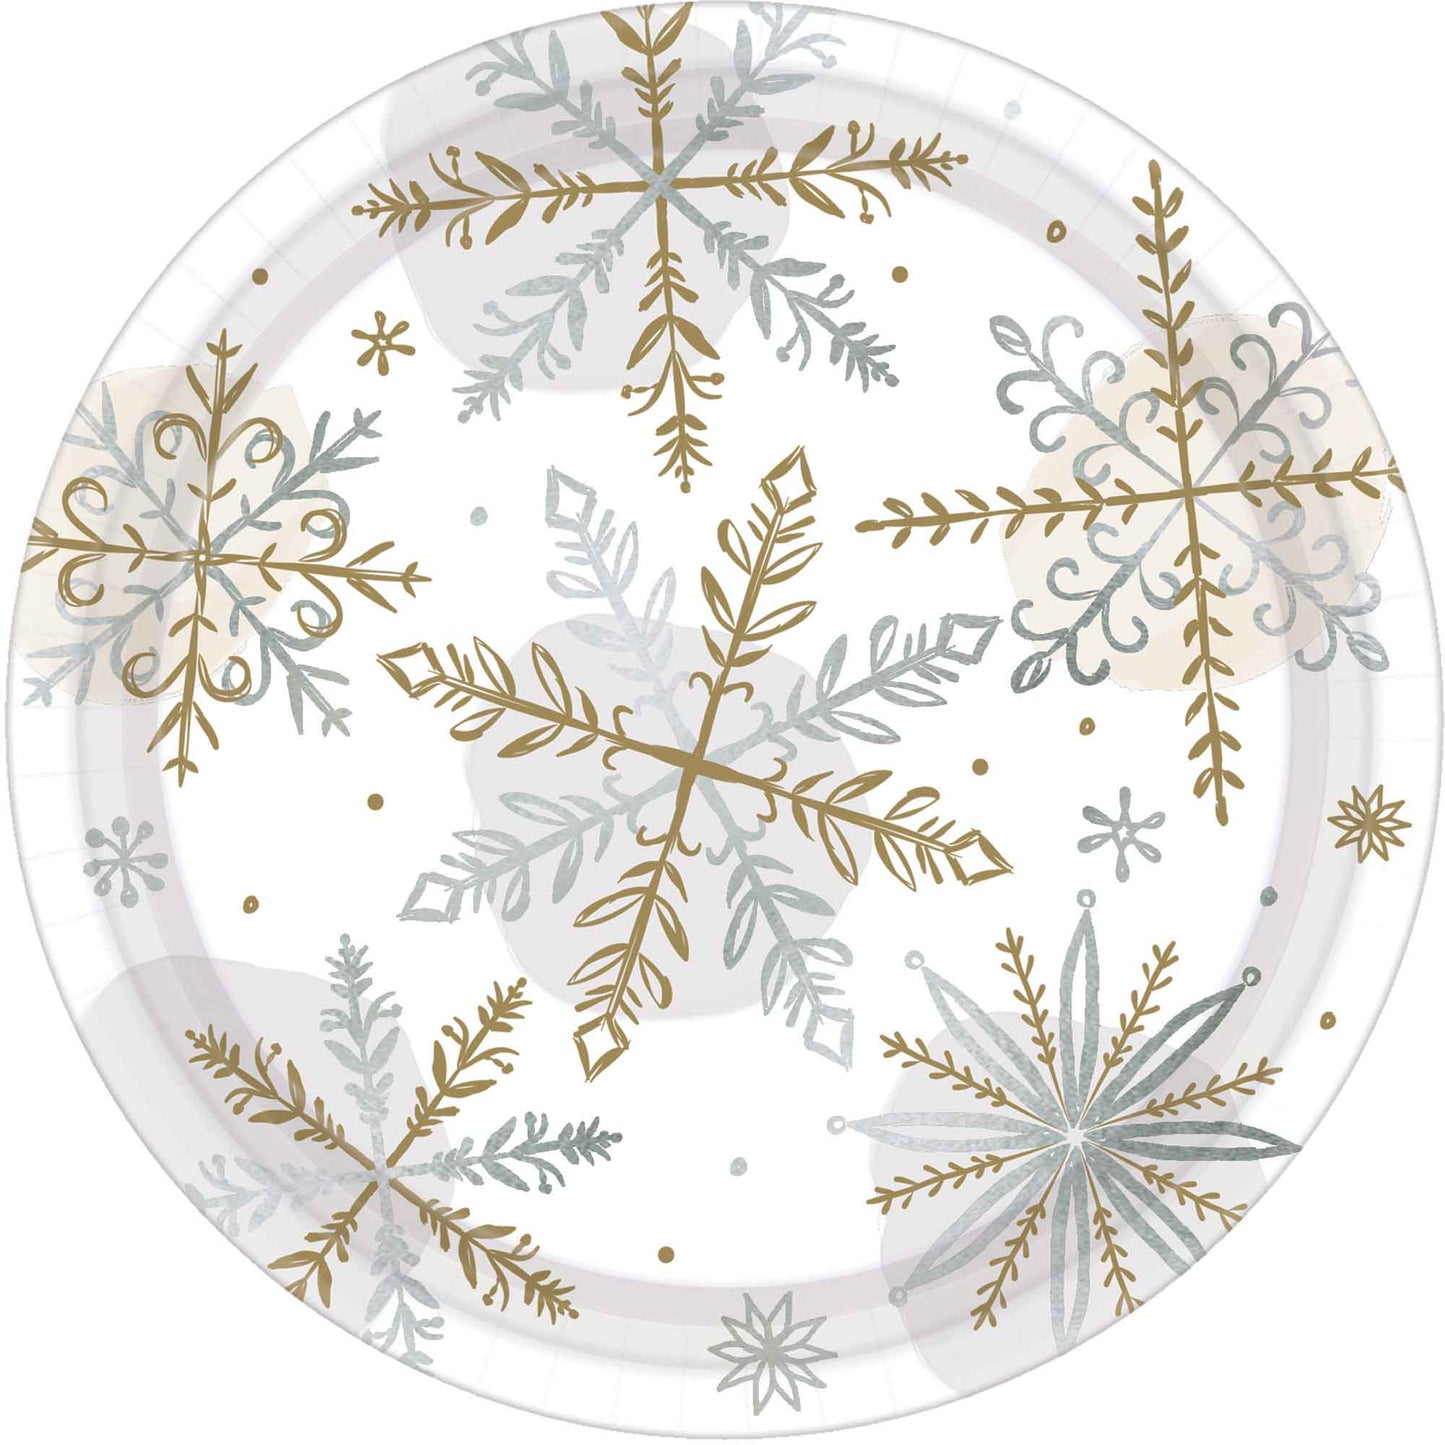 Shining Snowflakes 17cm Metallic Round Paper Plates